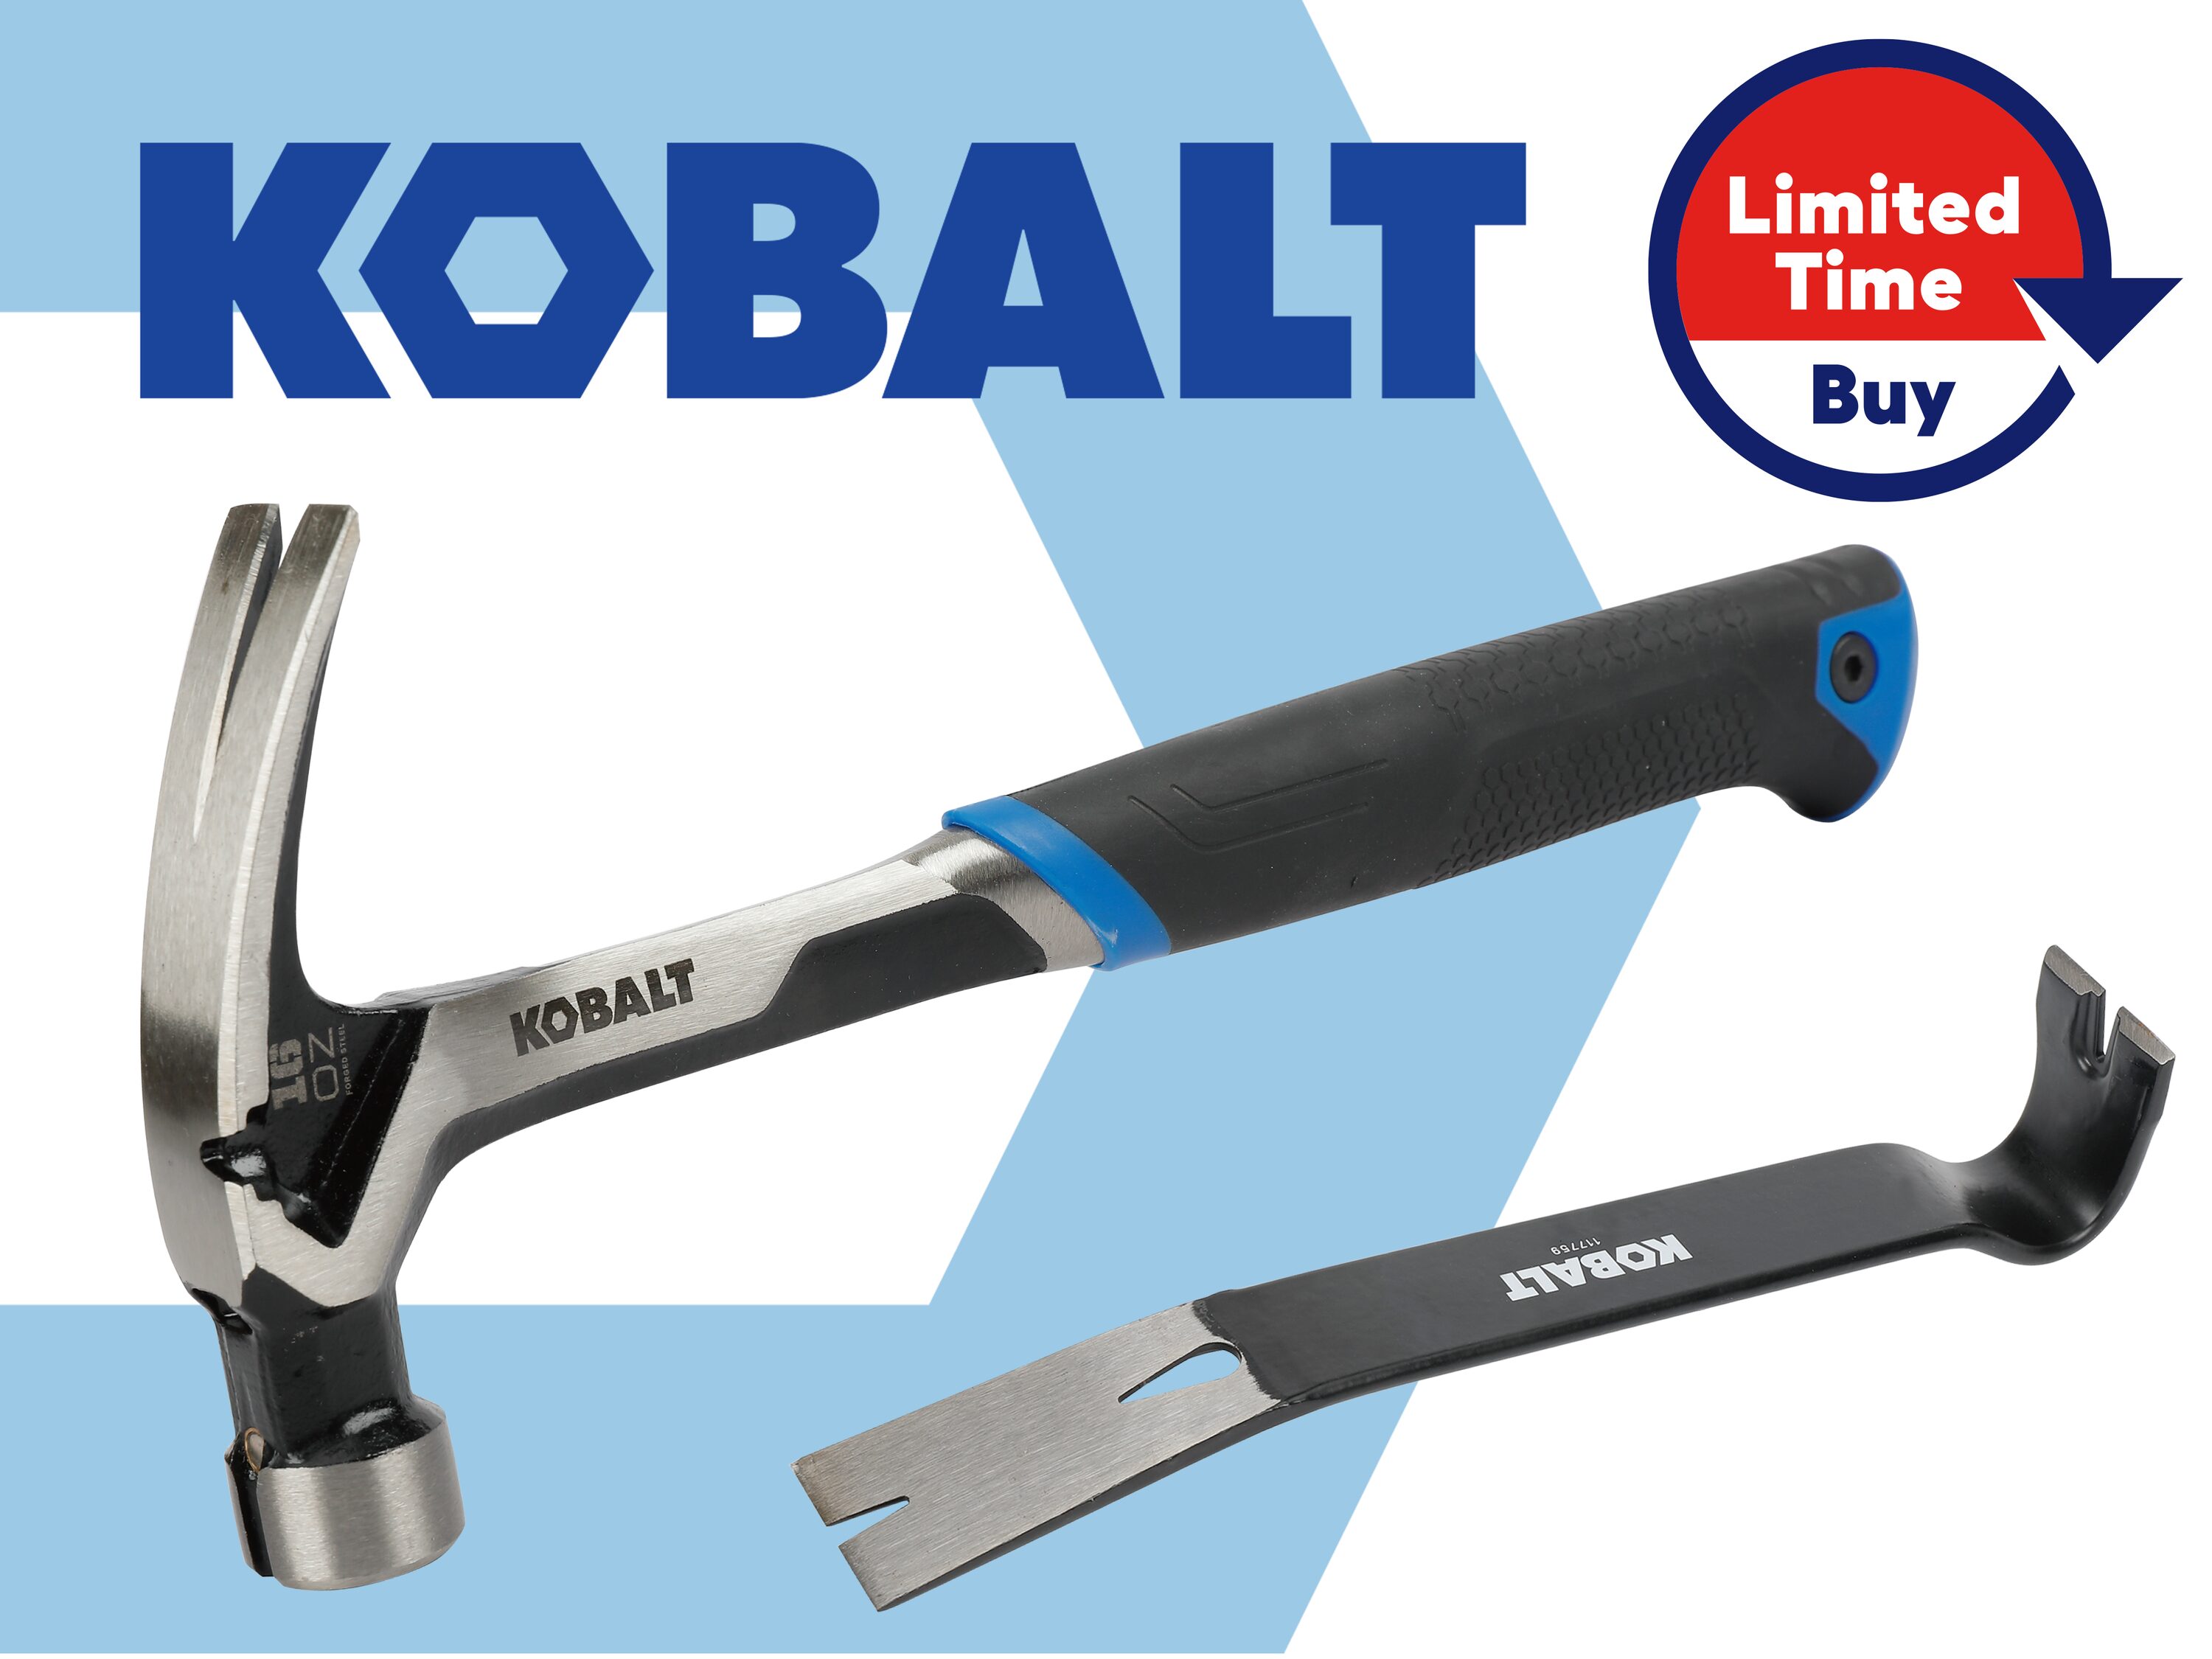 Kobalt 16-oz Smooth Face Steel Head Steel Ball Peen Hammer